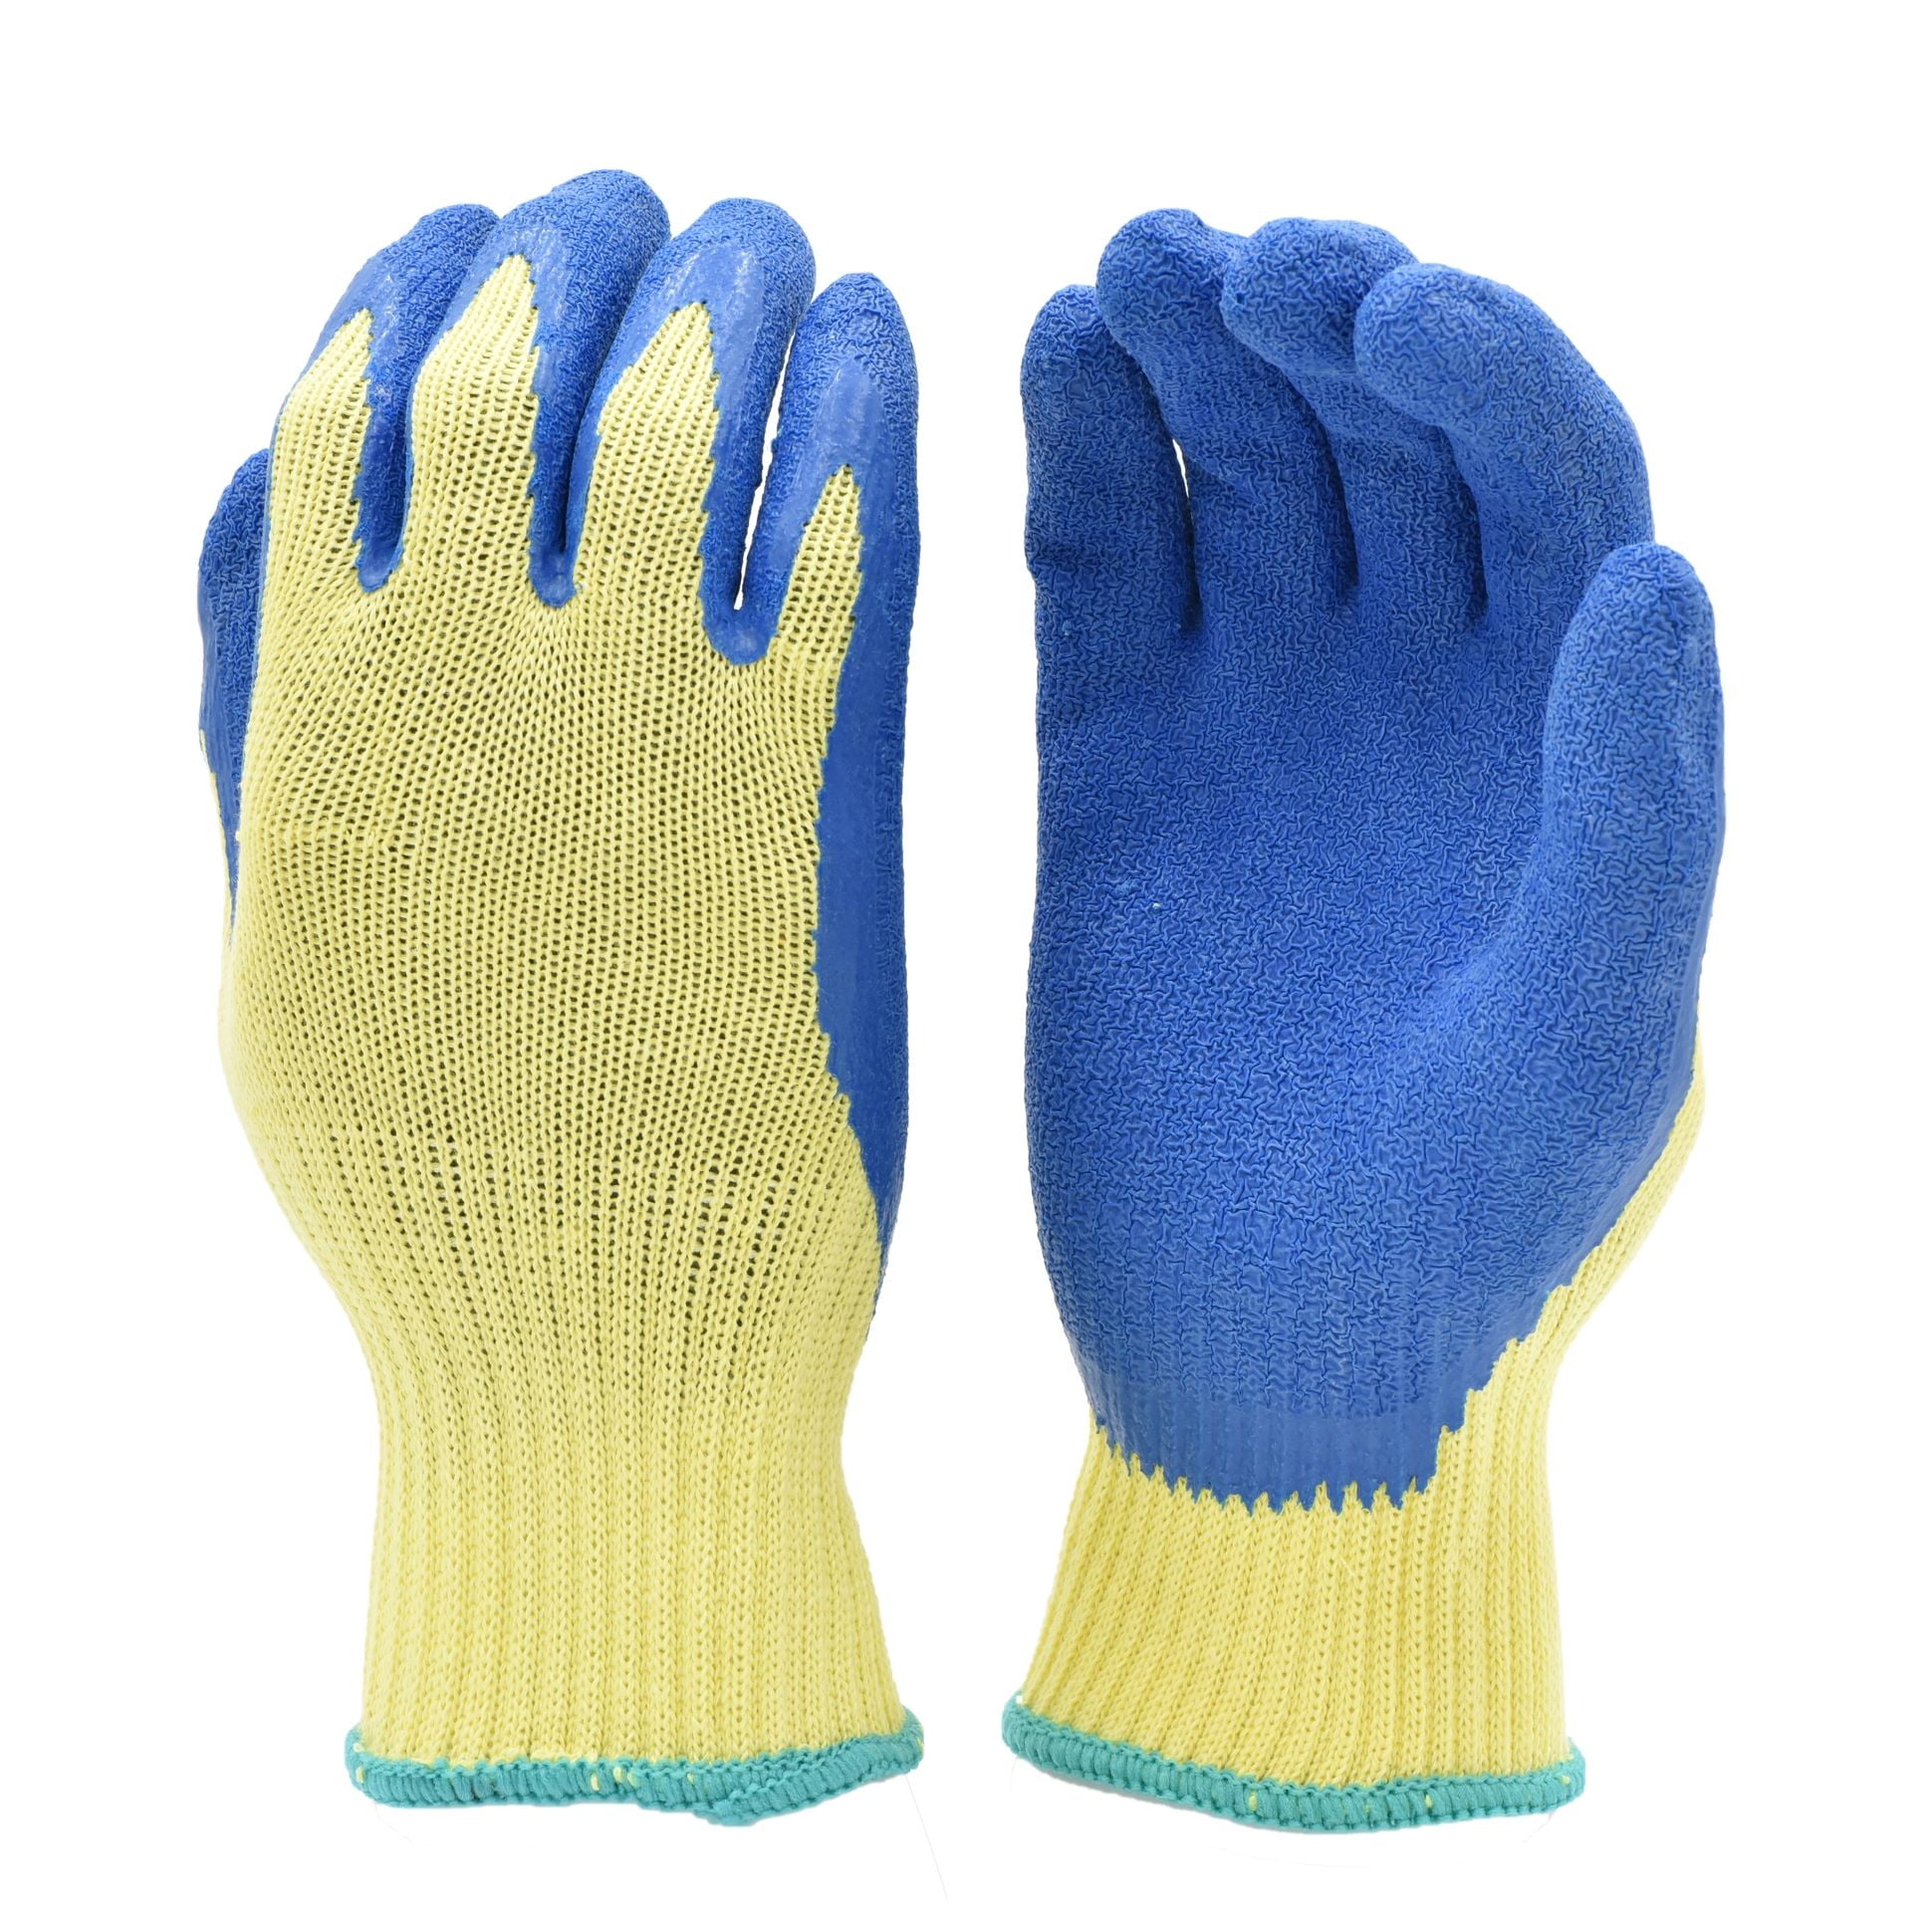 Sub Zero Gloves